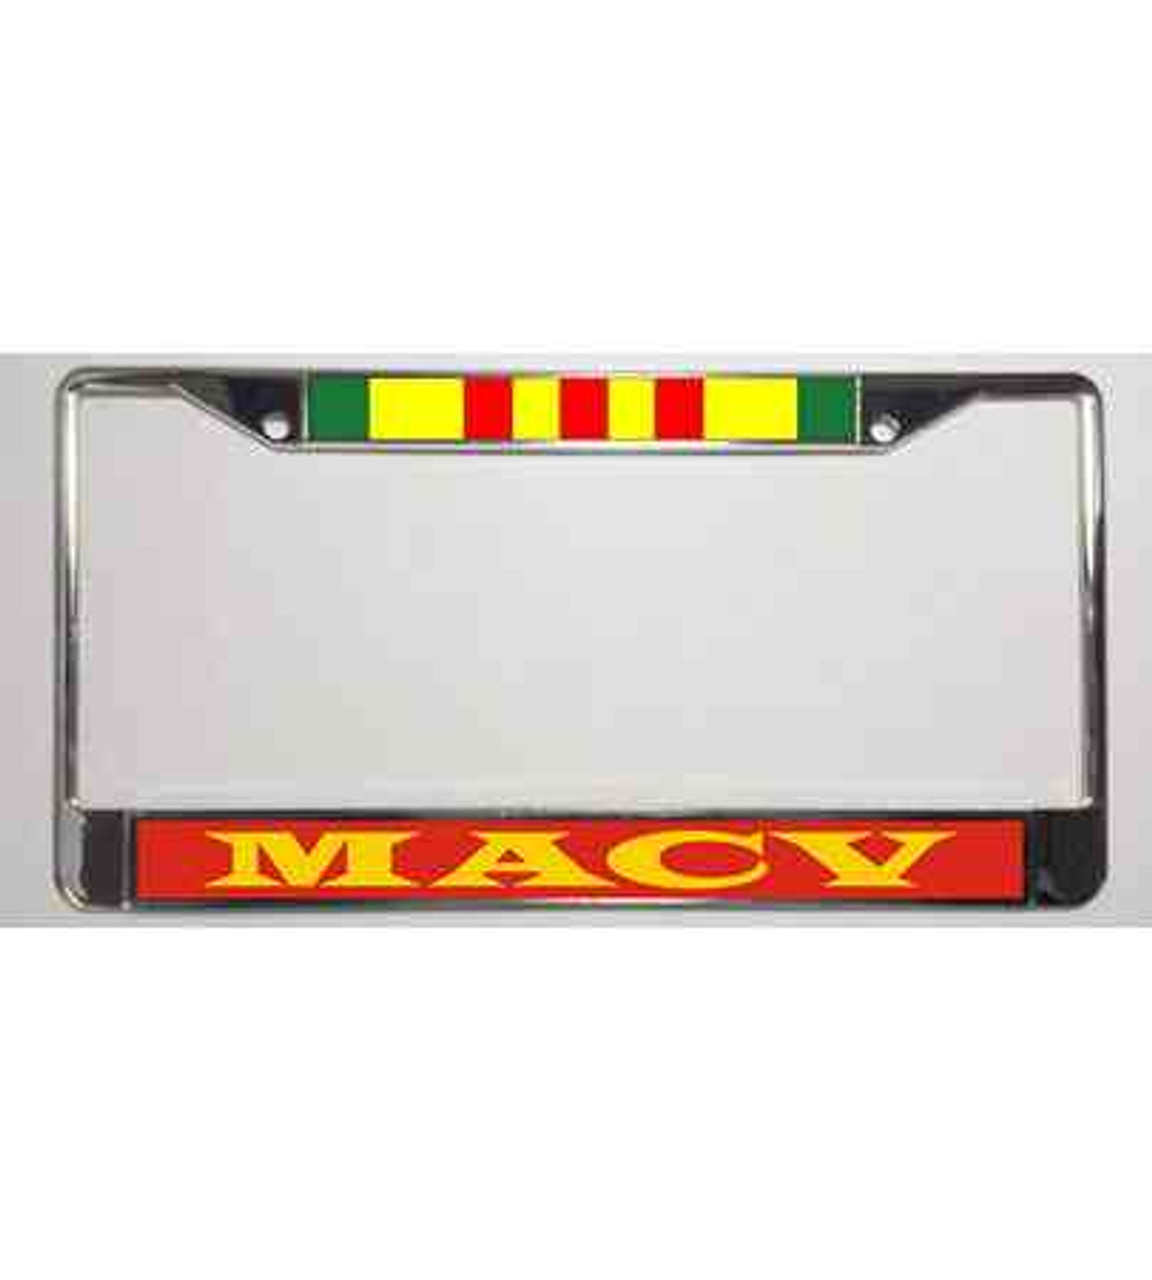 macv vietnam ribbon license plate frame